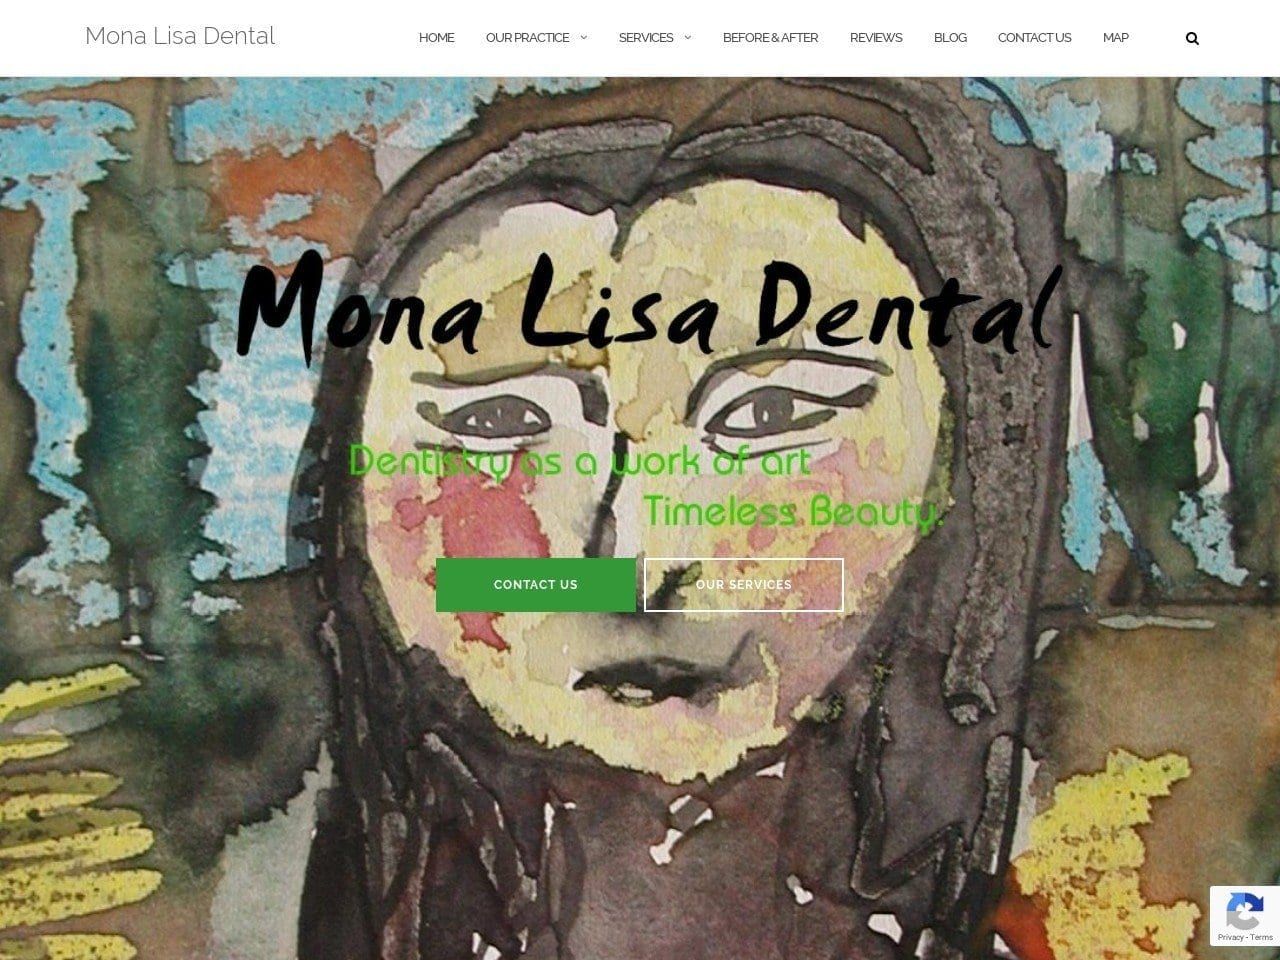 Mona Lisa Dental Website Screenshot from monalisadental.com